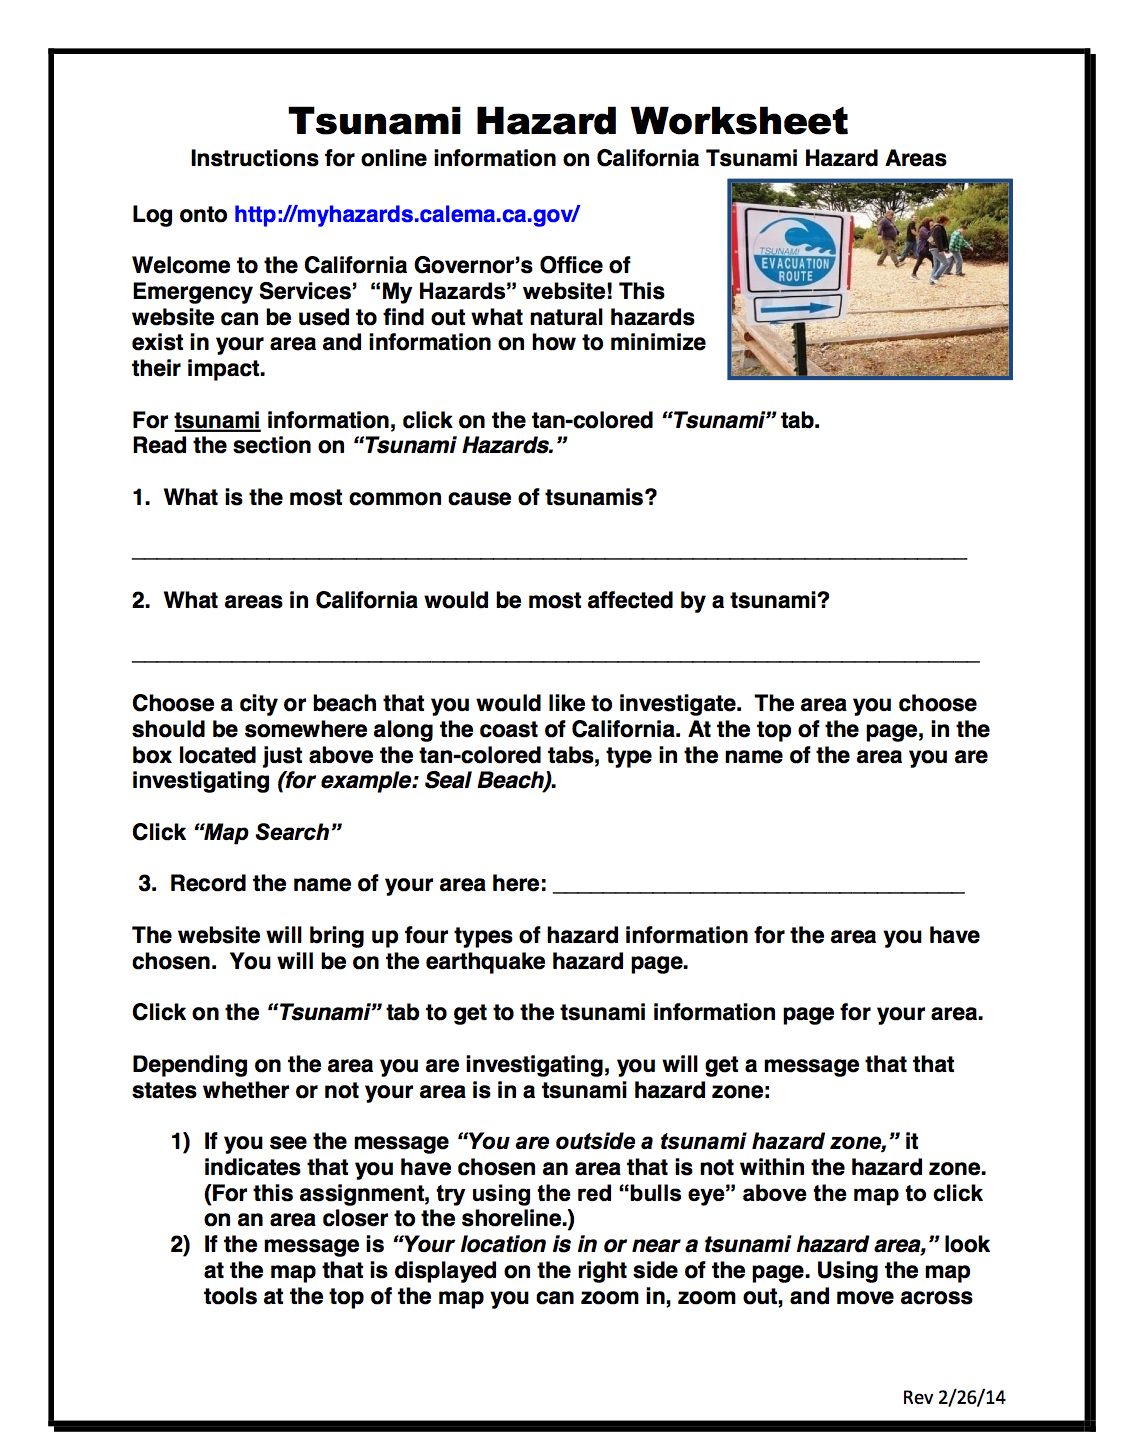 Cal OES Tsunami Lesson Worksheet